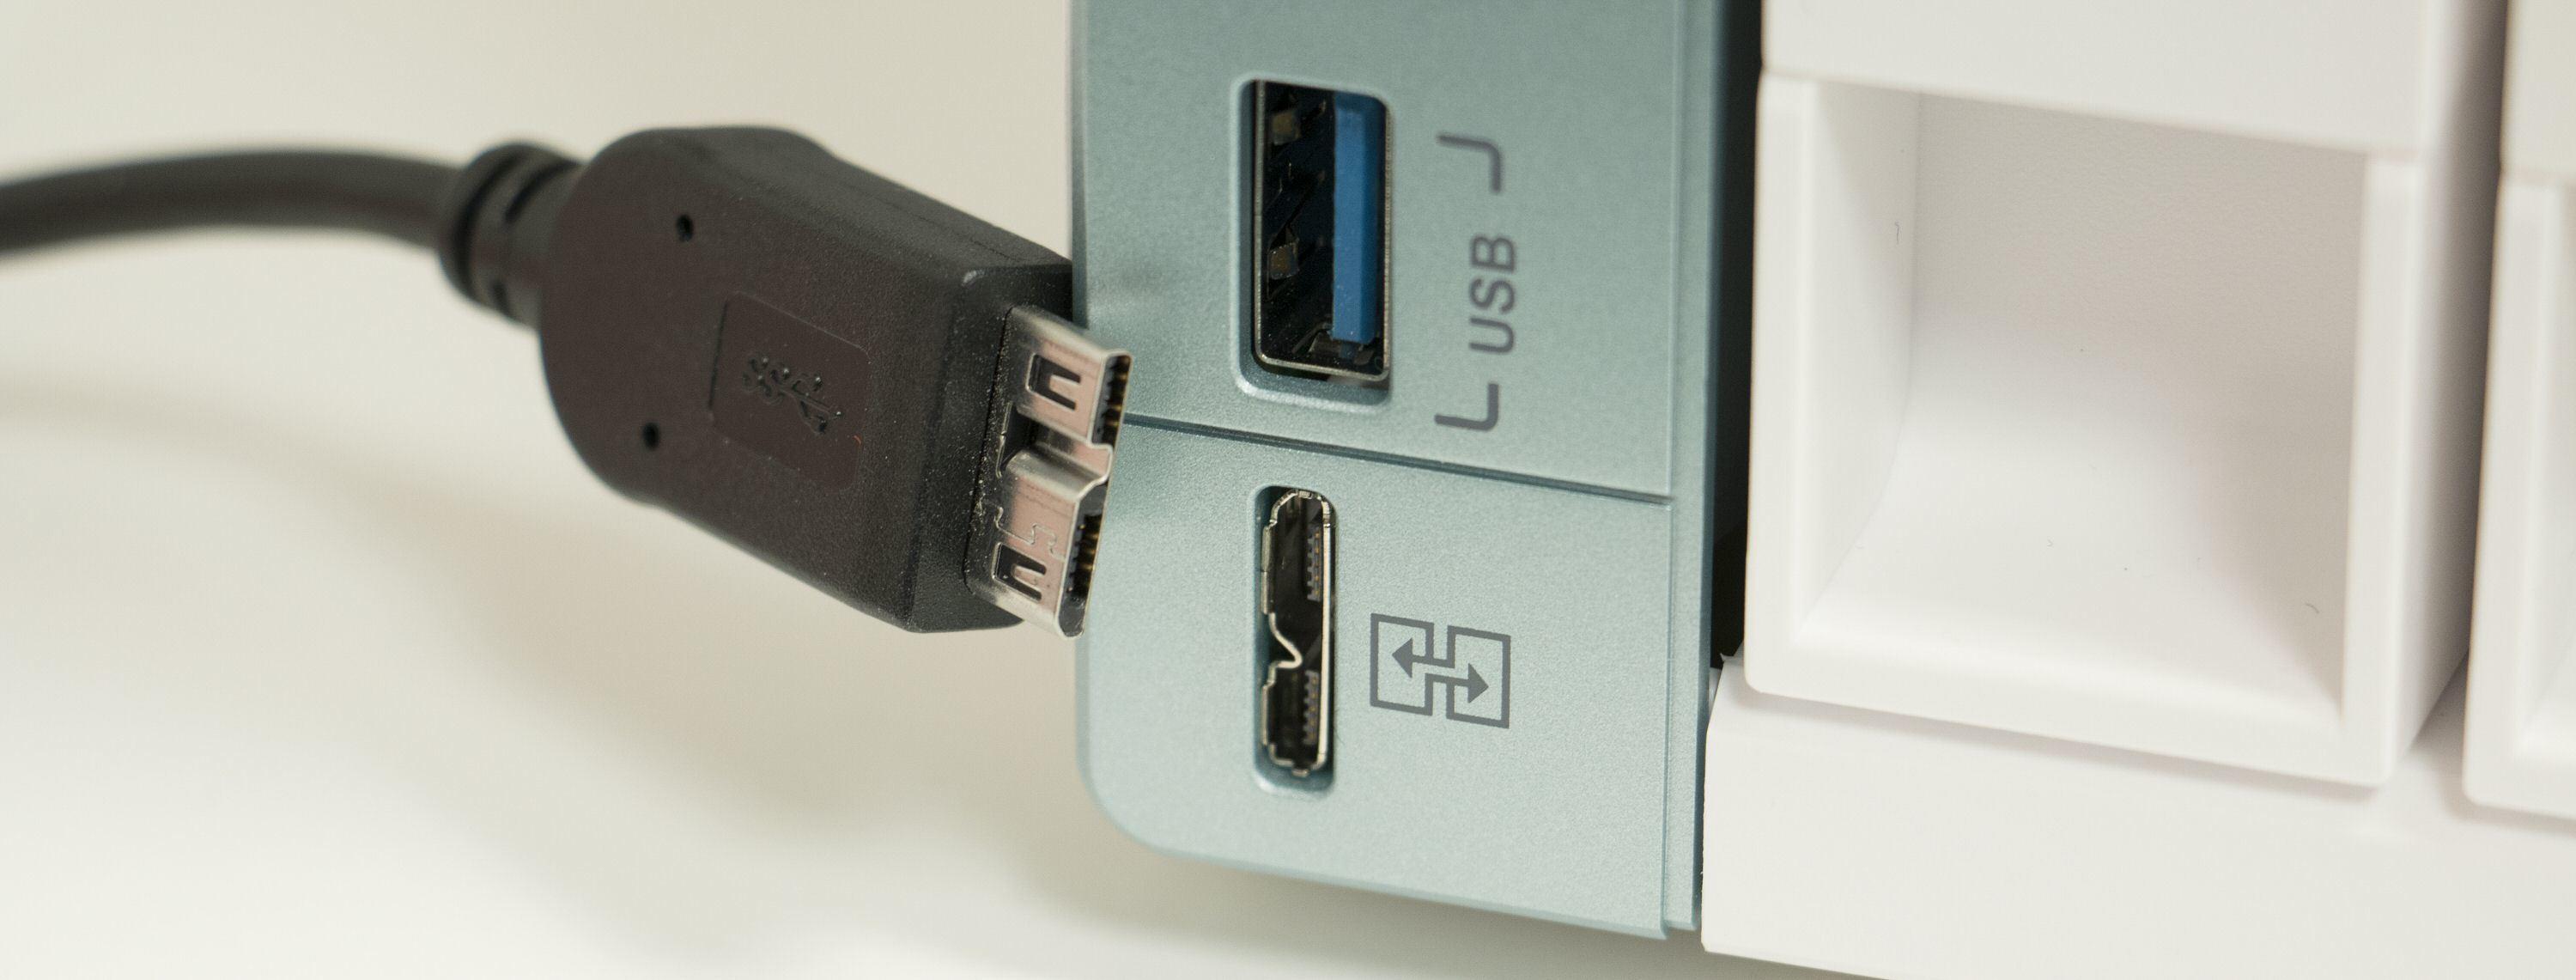 For full fart med USB QuickAccess trenger du en Micro-B SuperSpeed-kabel.